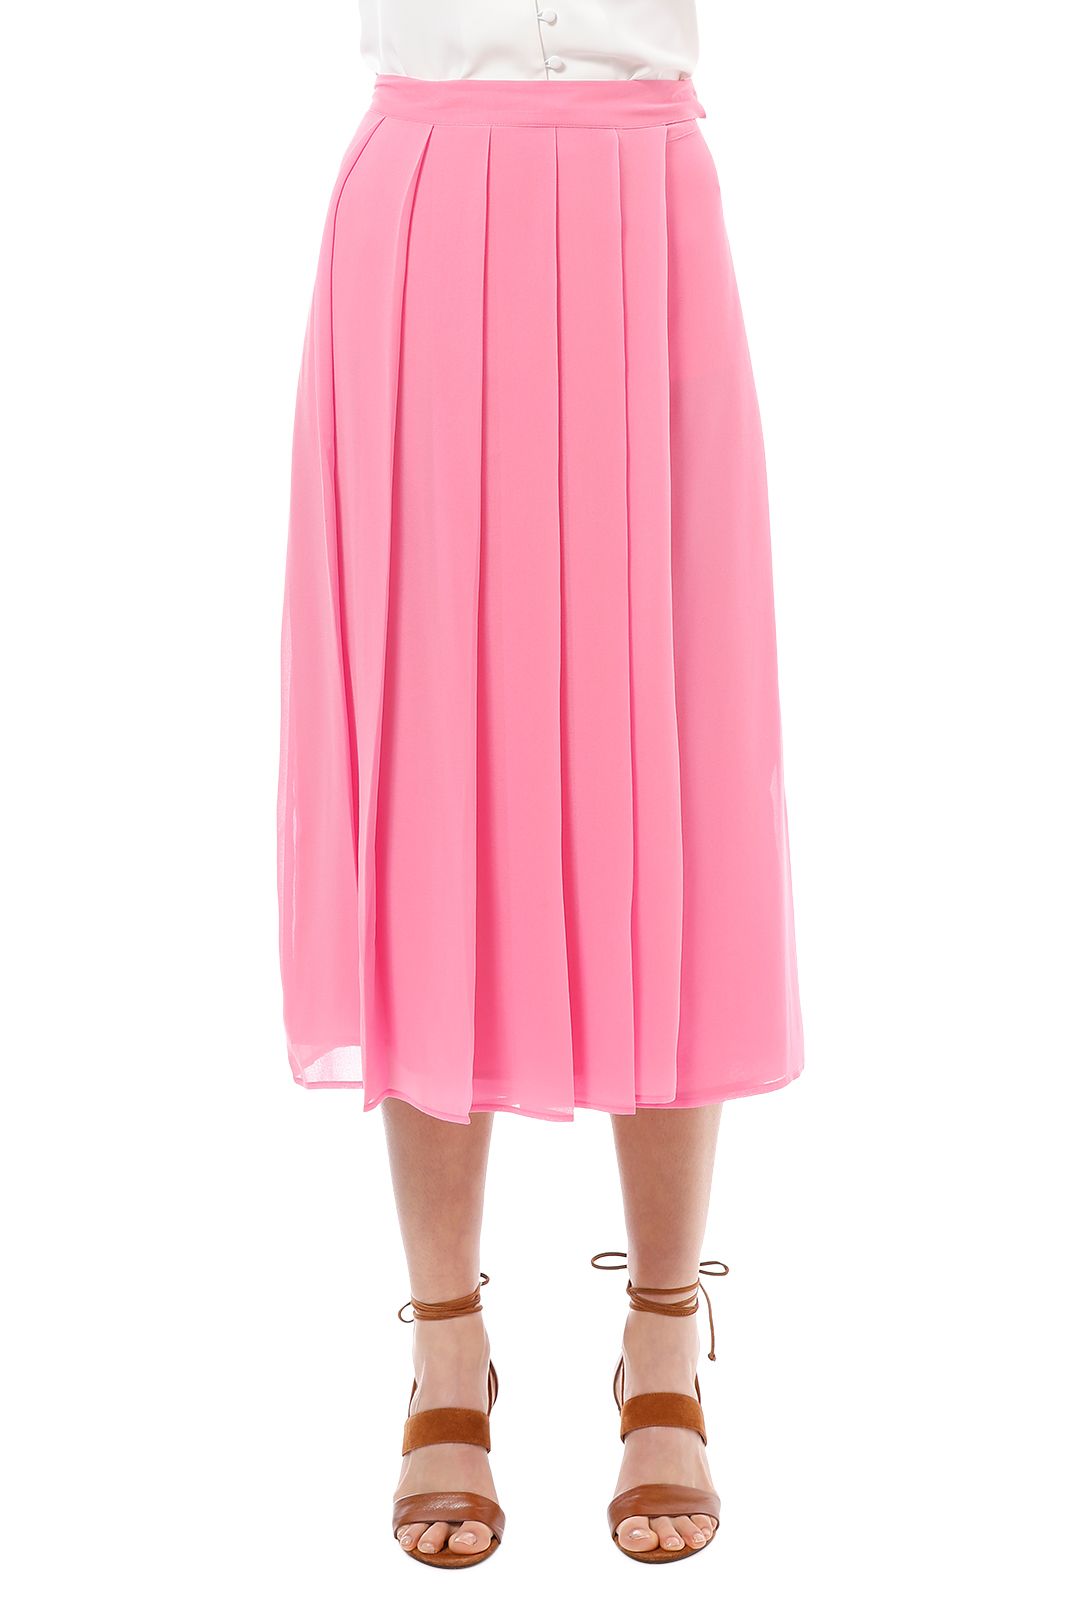 Closet London - Pleated Skirt - Pink - Close Up